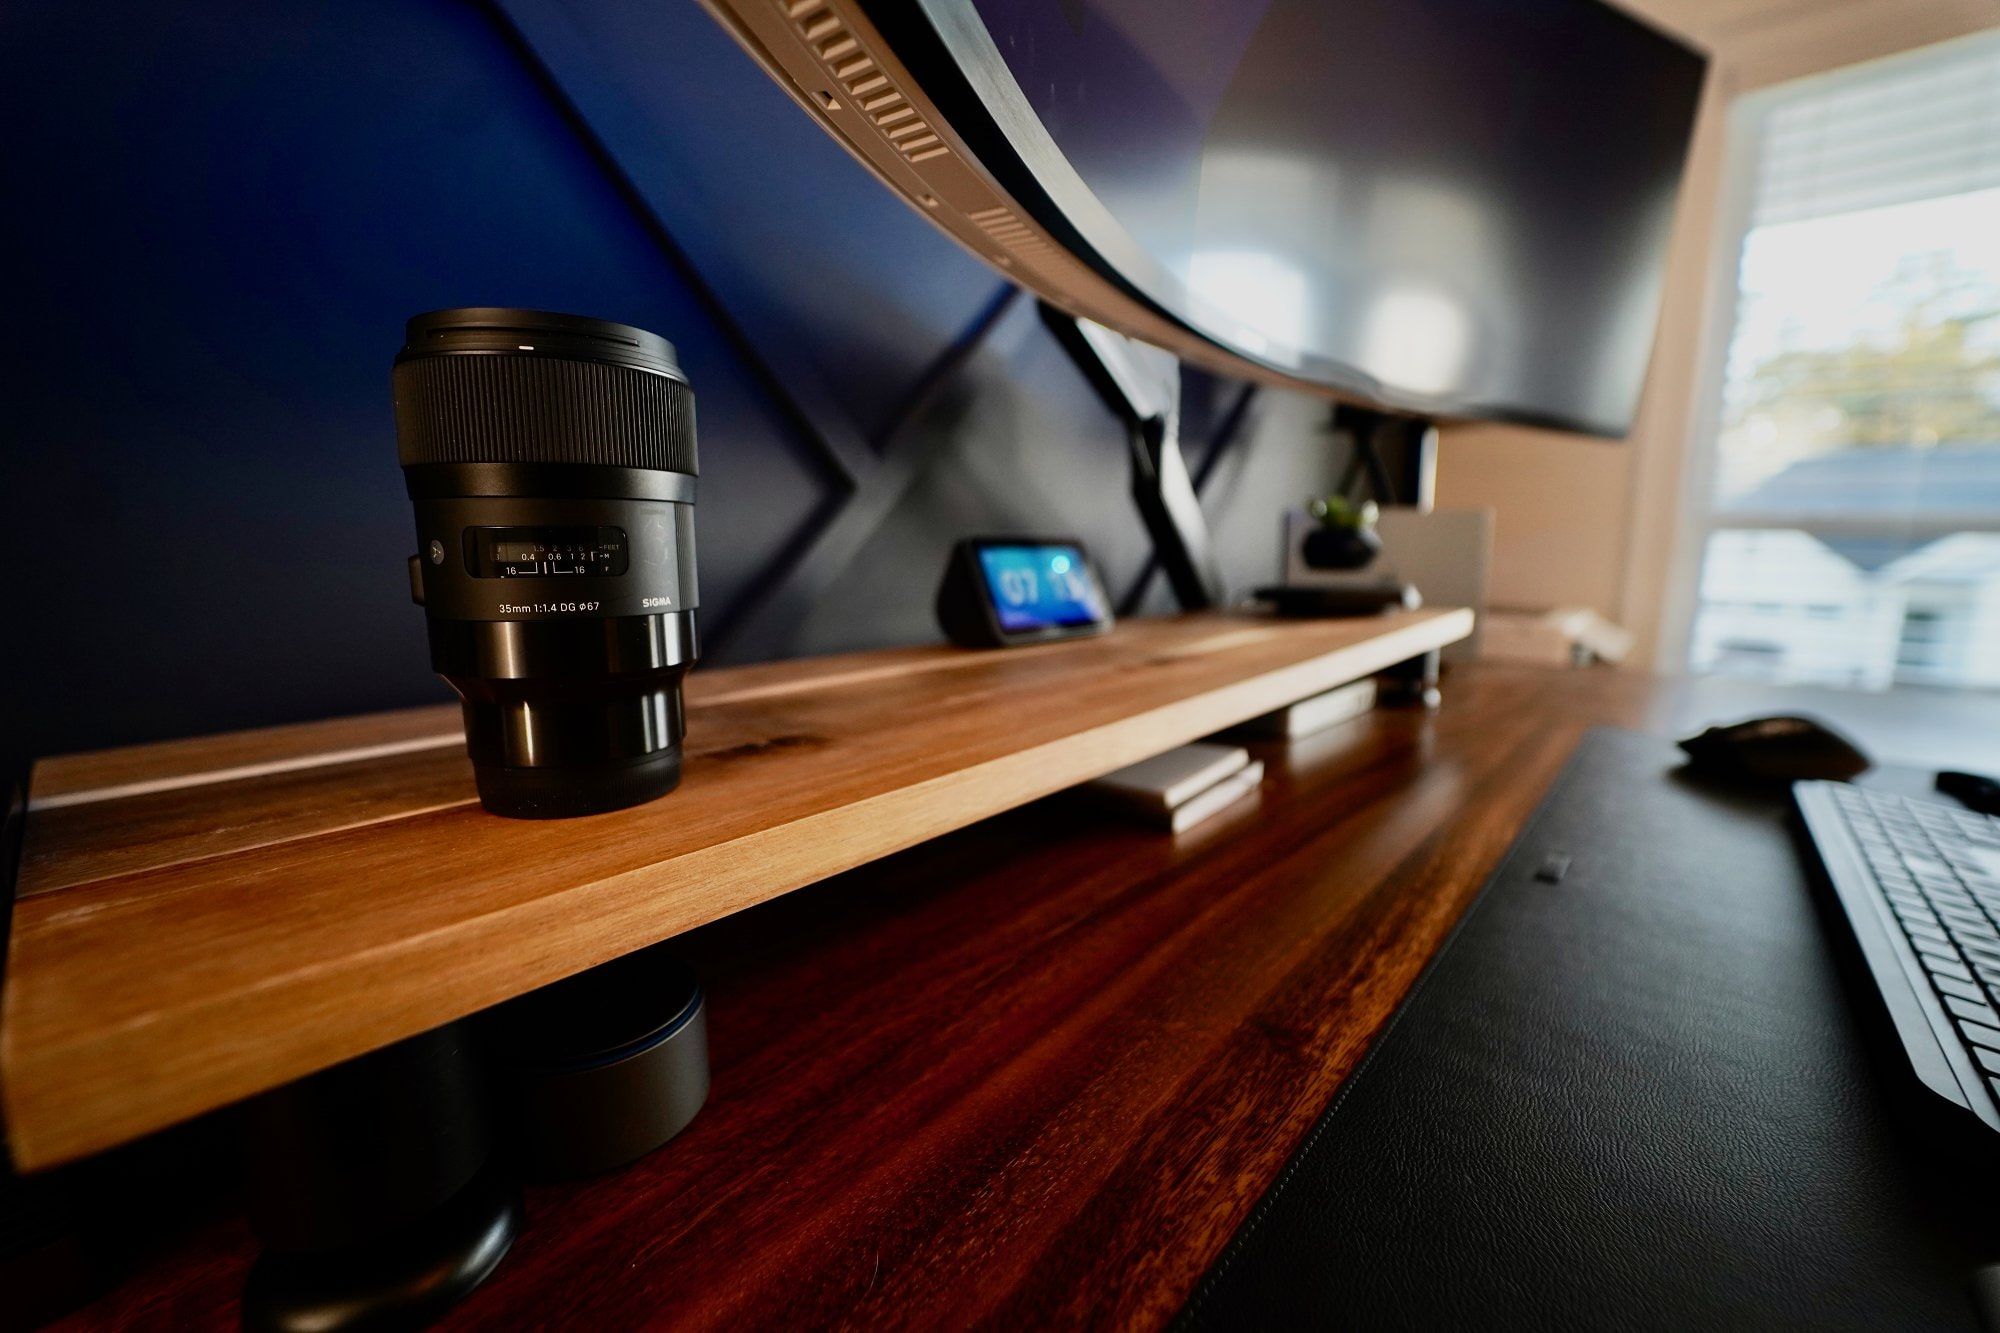 A Sigma DG HSM lens on a desk shelf